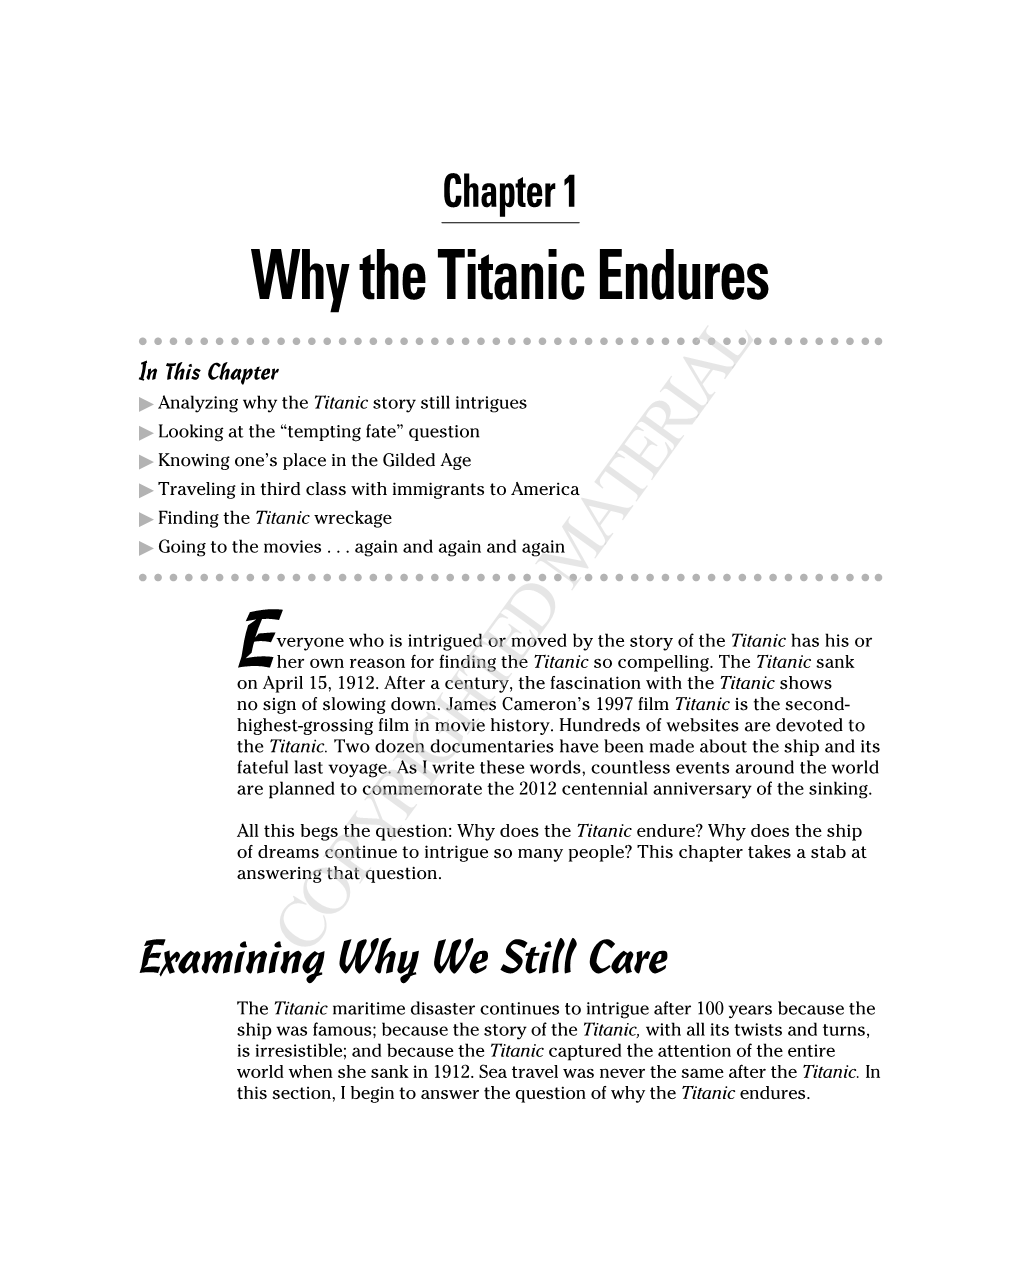 Why the Titanic Endures